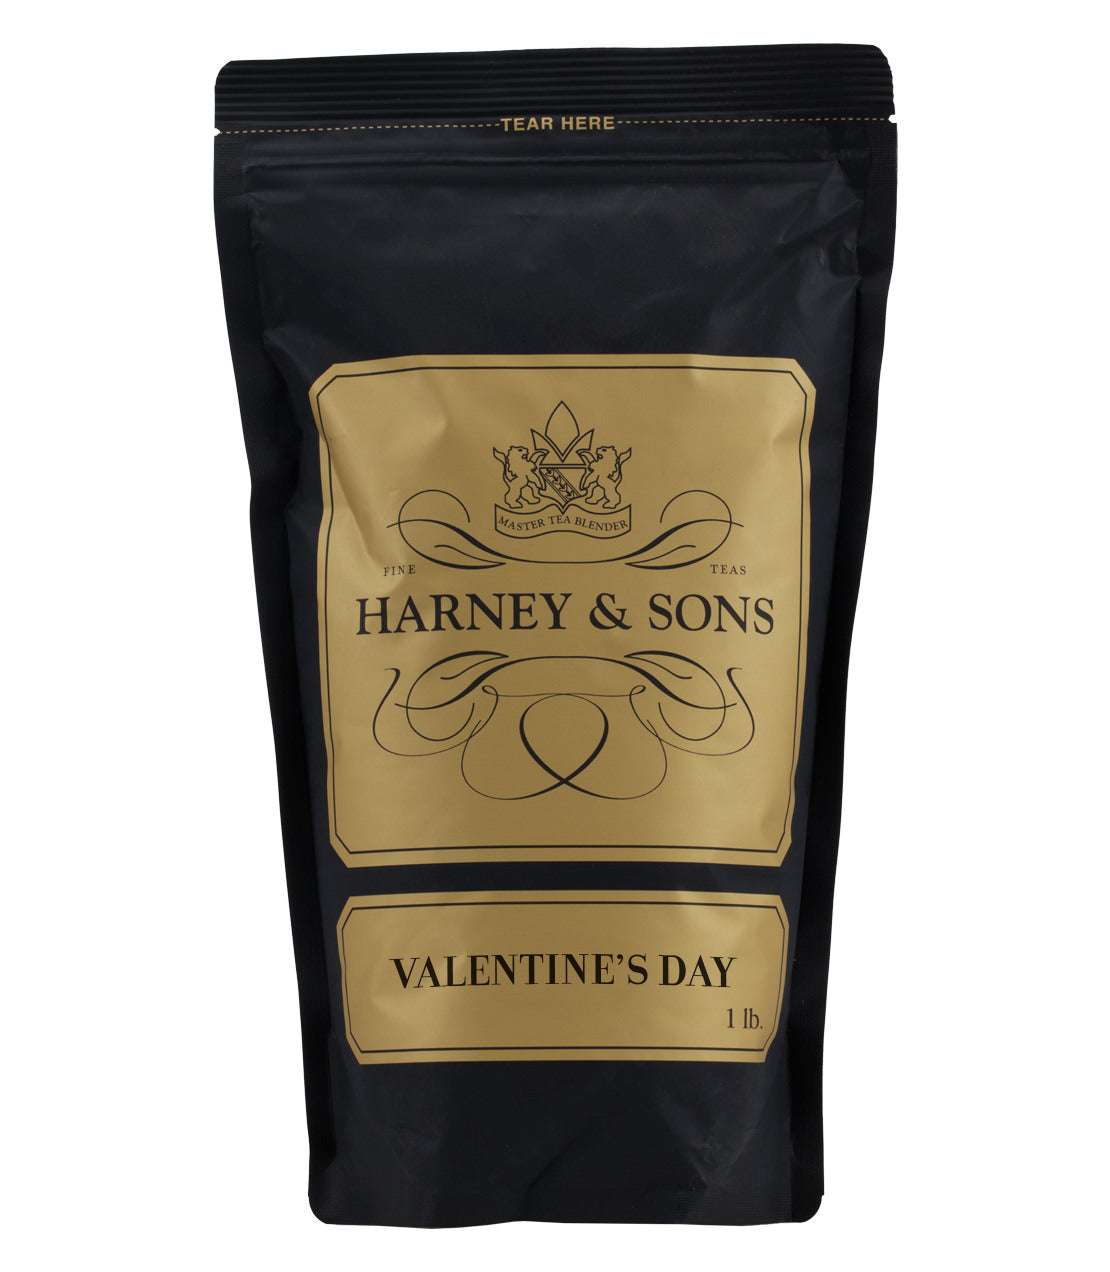 Valentine's Day - Loose 1 lb. Bag - Harney & Sons Fine Teas